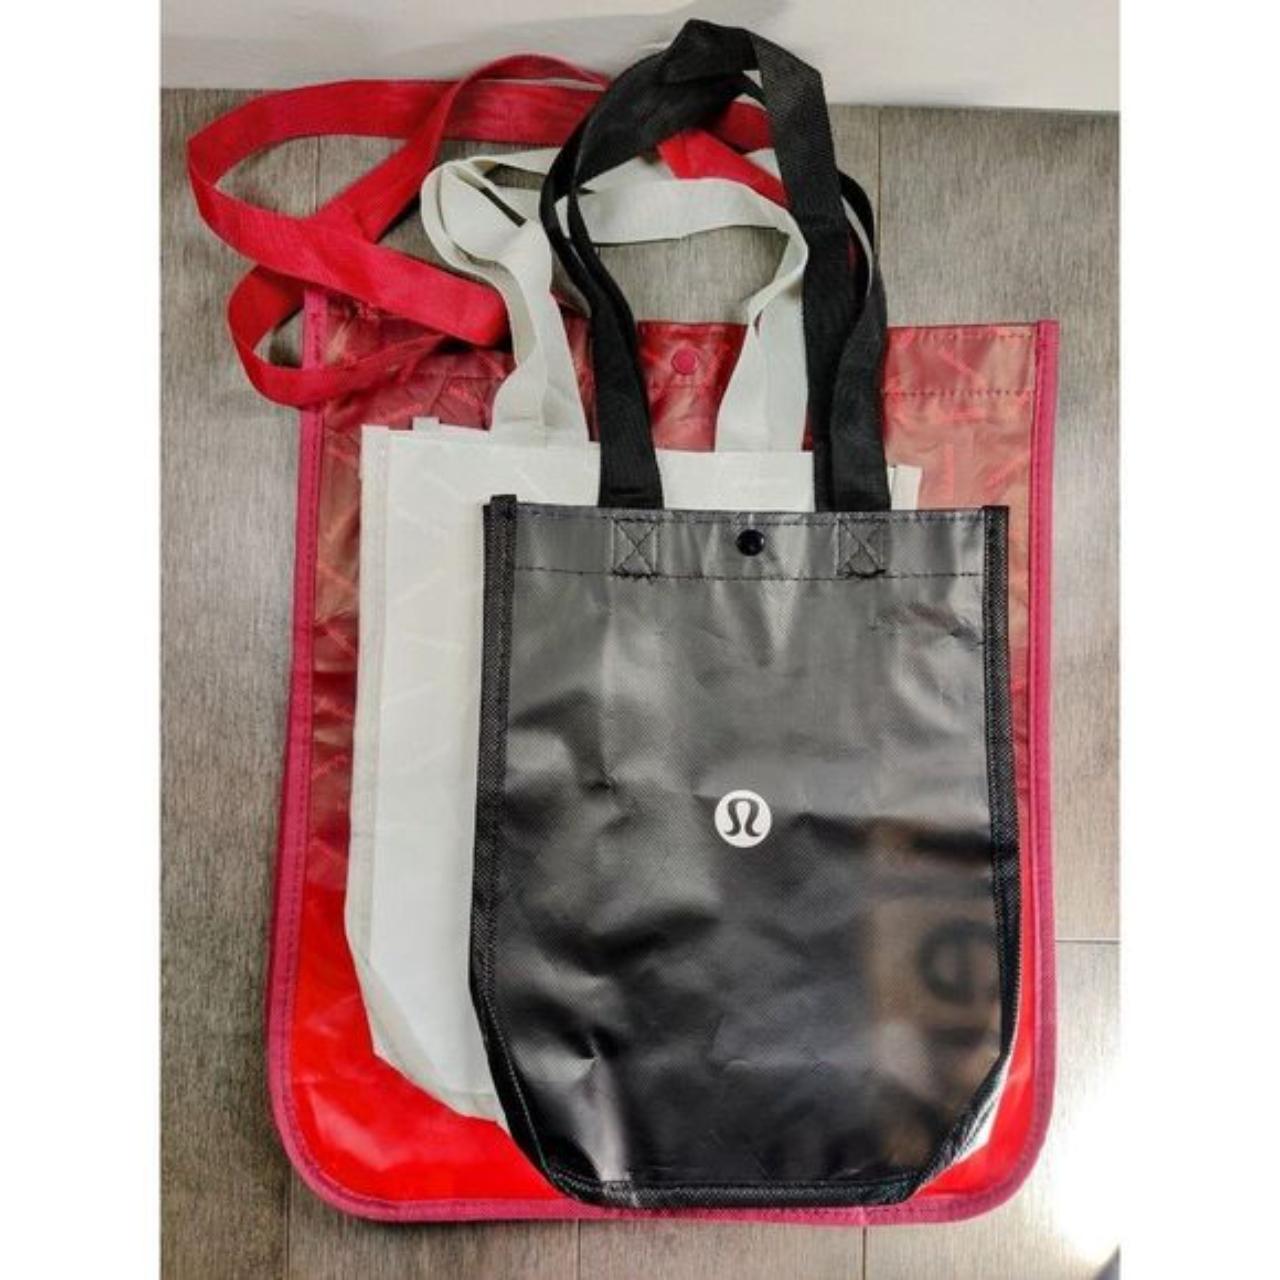 Lululemon Reusable Tote Carryall Handbag (Red)